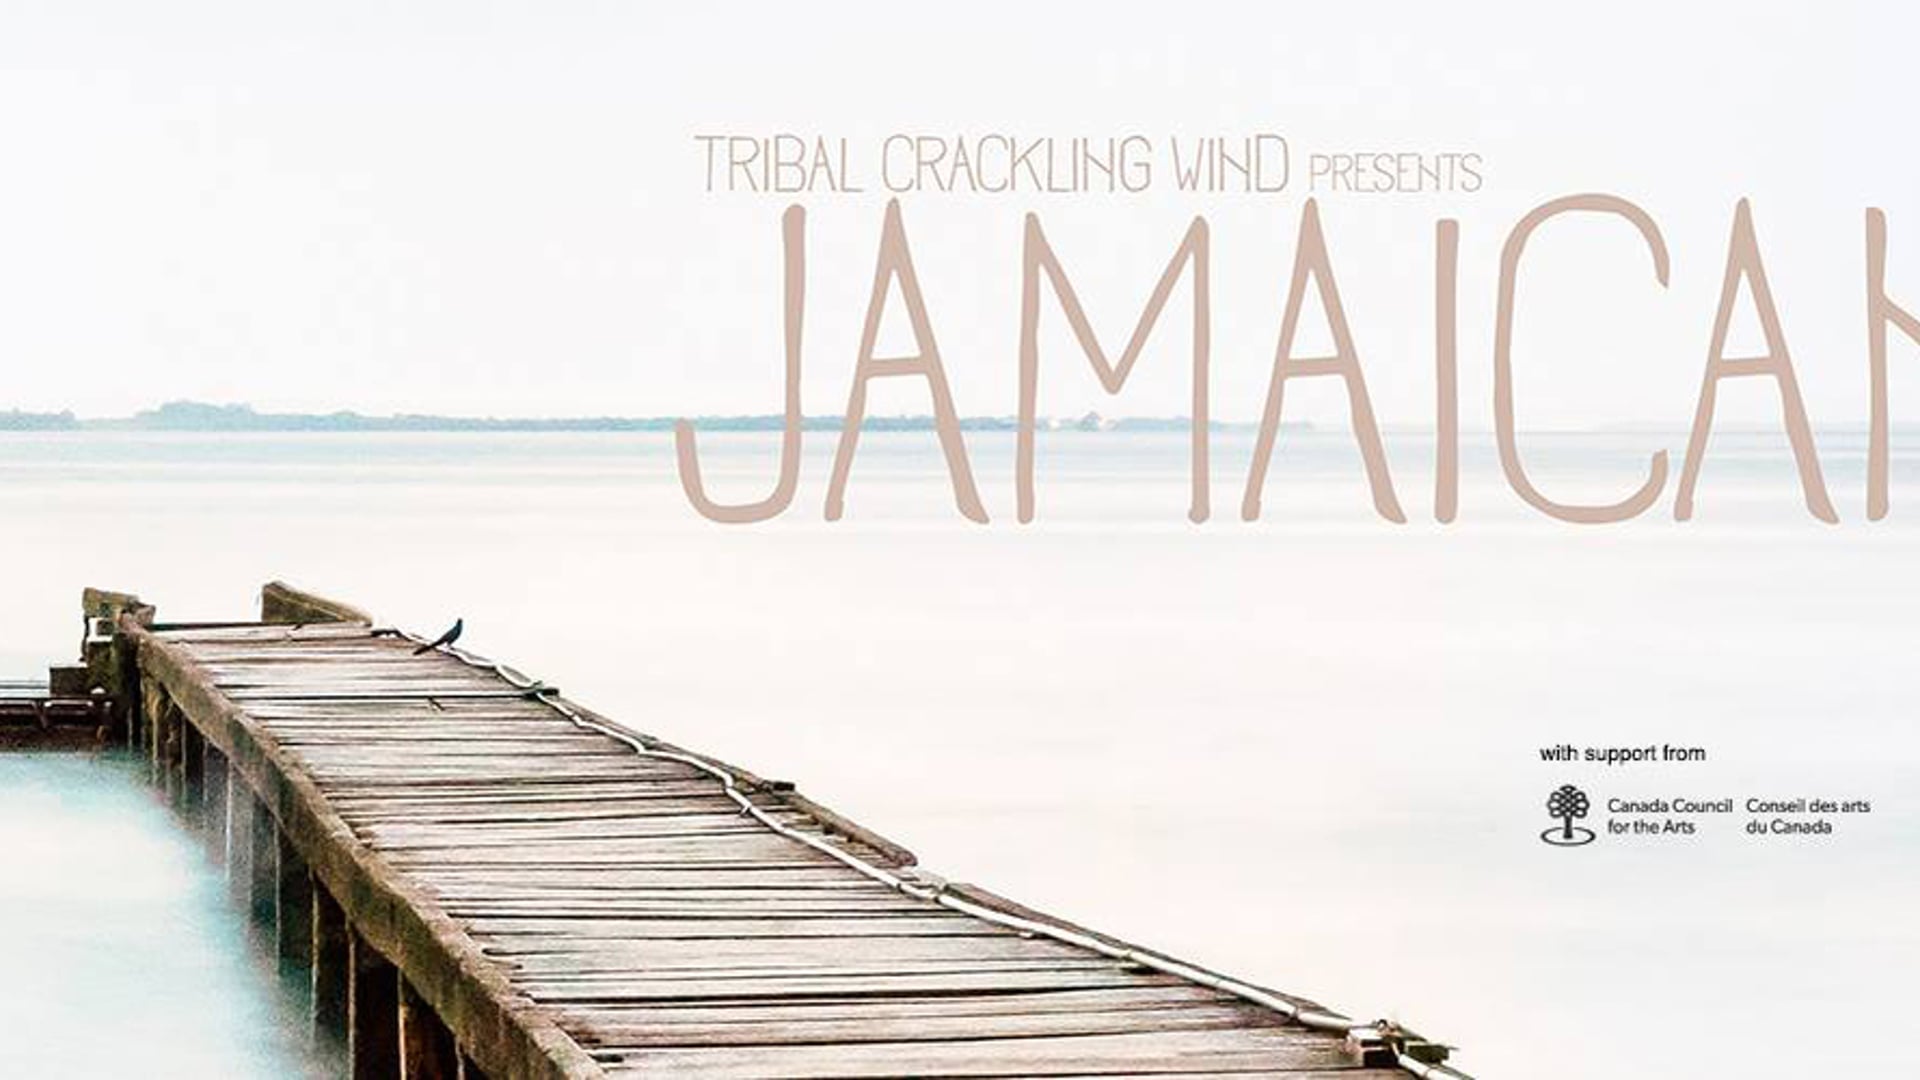 JAMAICAN [trailer]